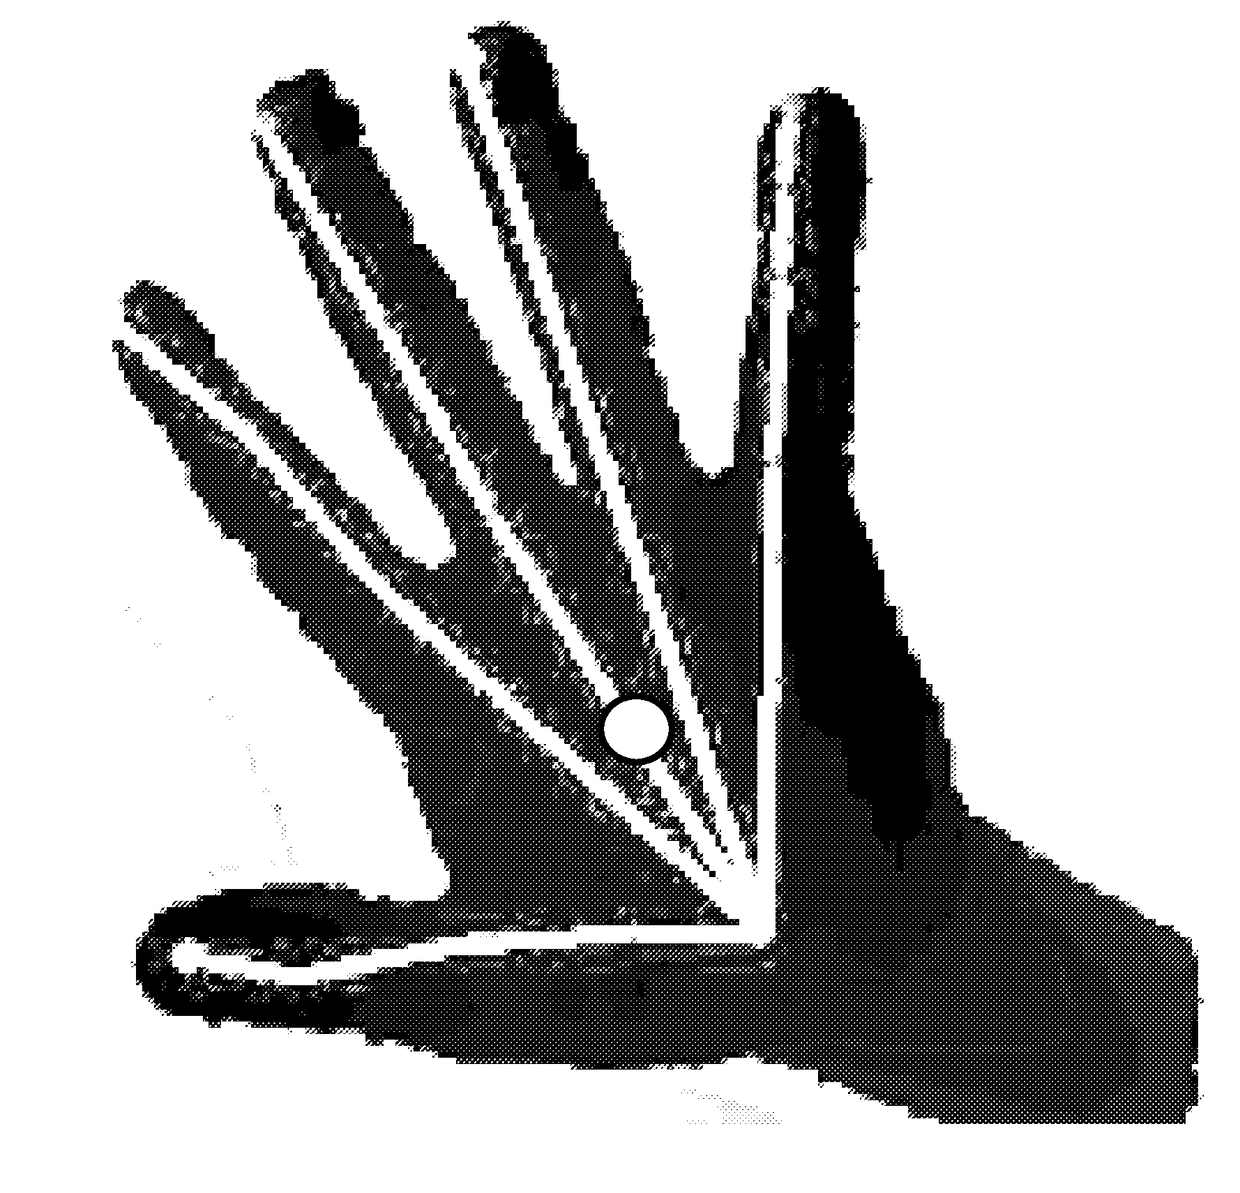 Fingertip identification for gesture control